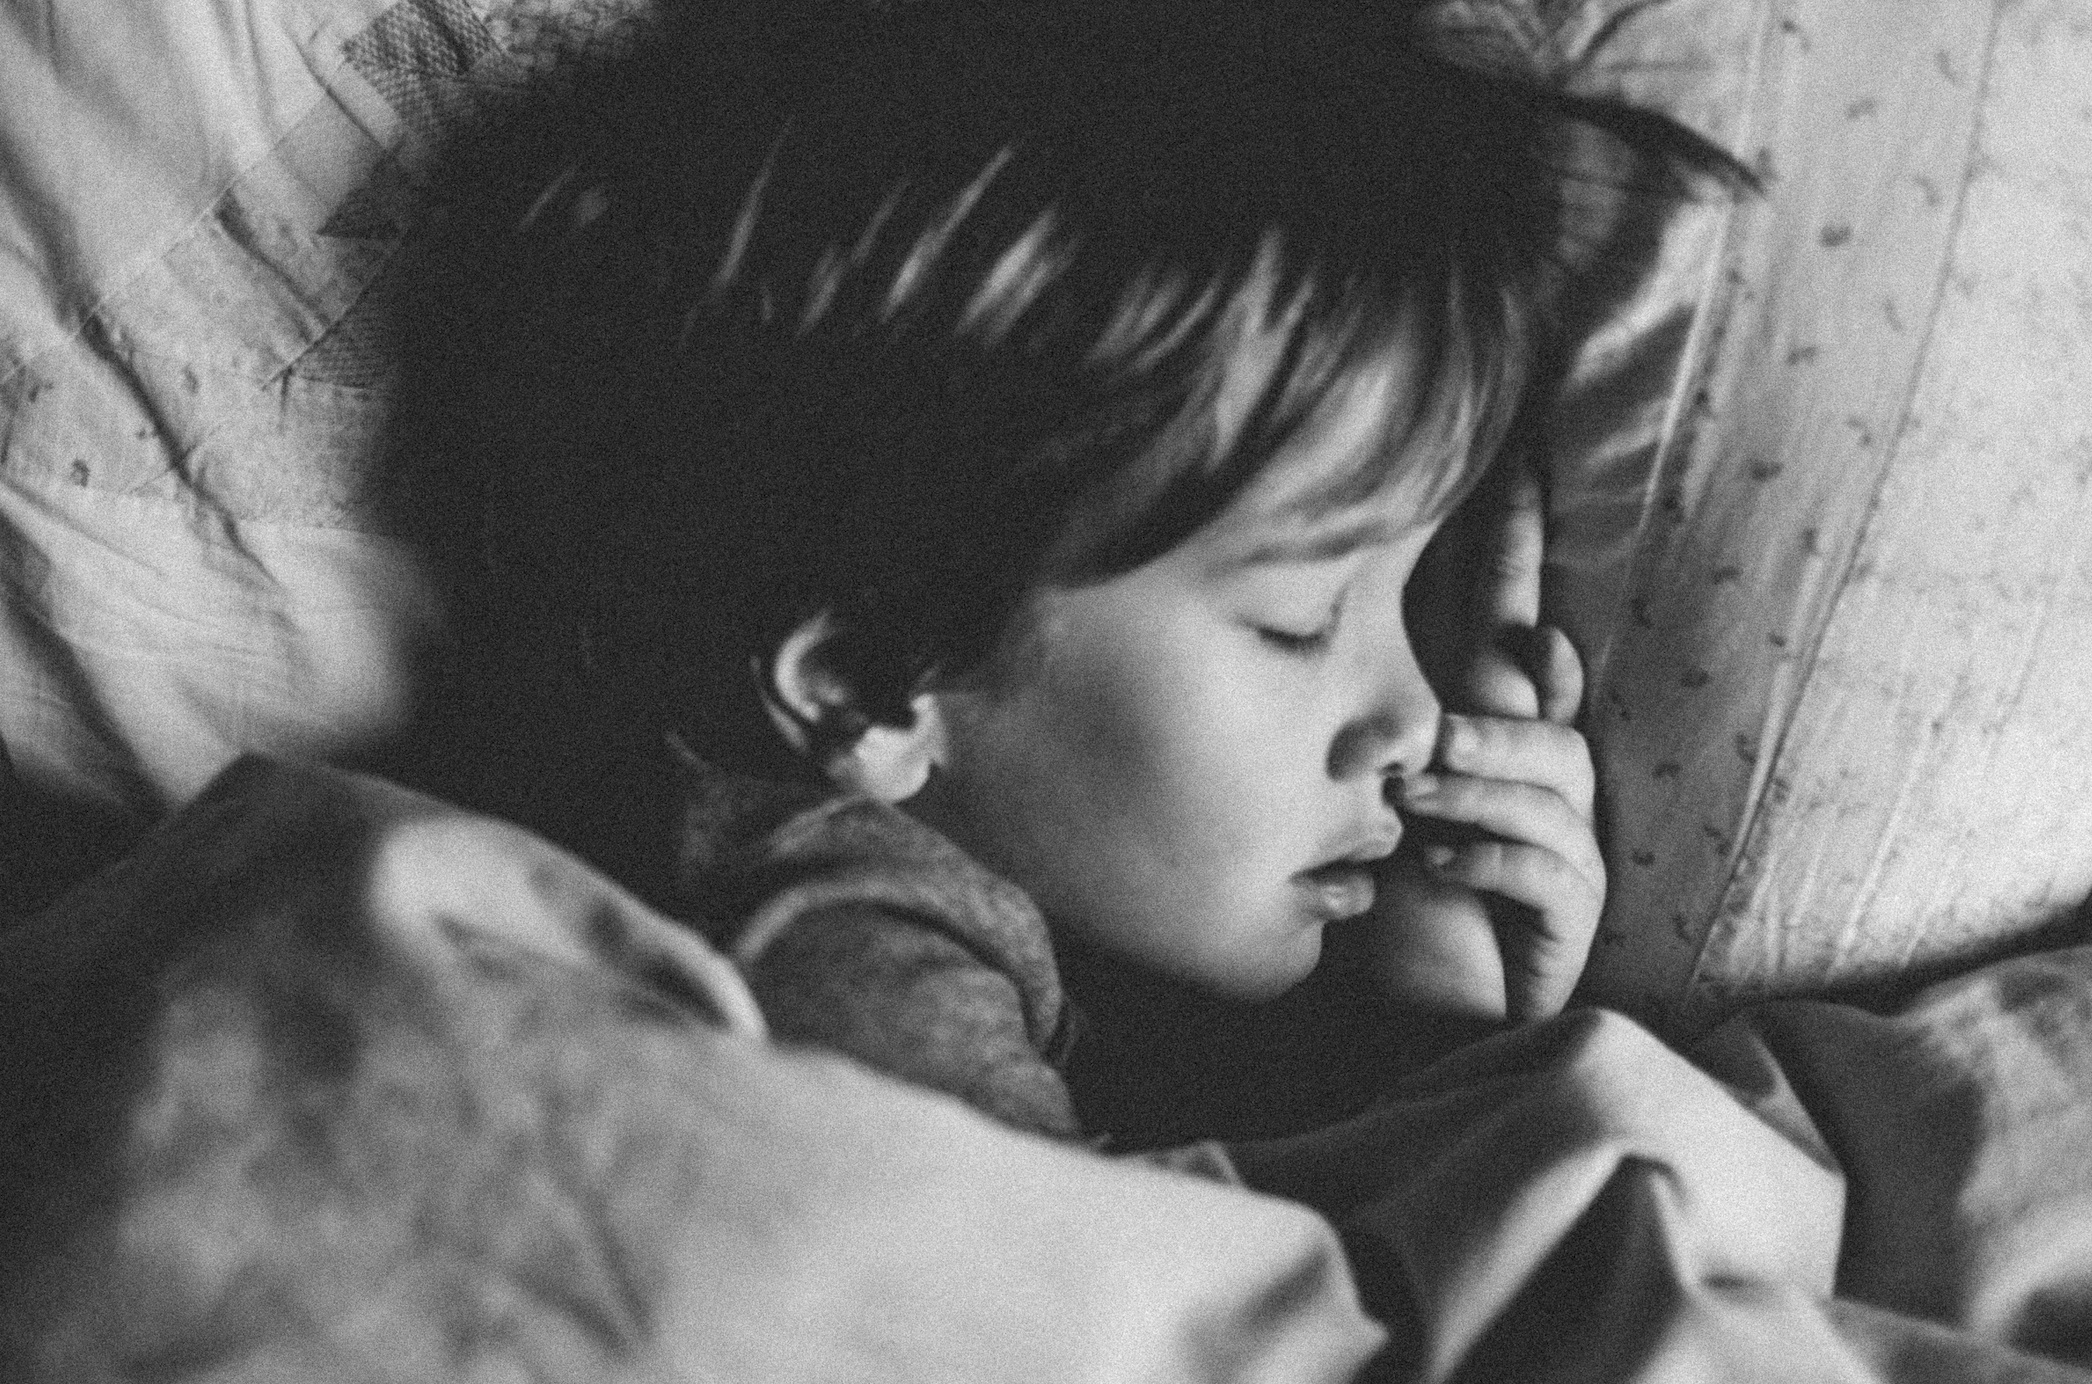 Black and white photo of boy sleeping in bed; image by Annie Spratt, via Unsplash.com.